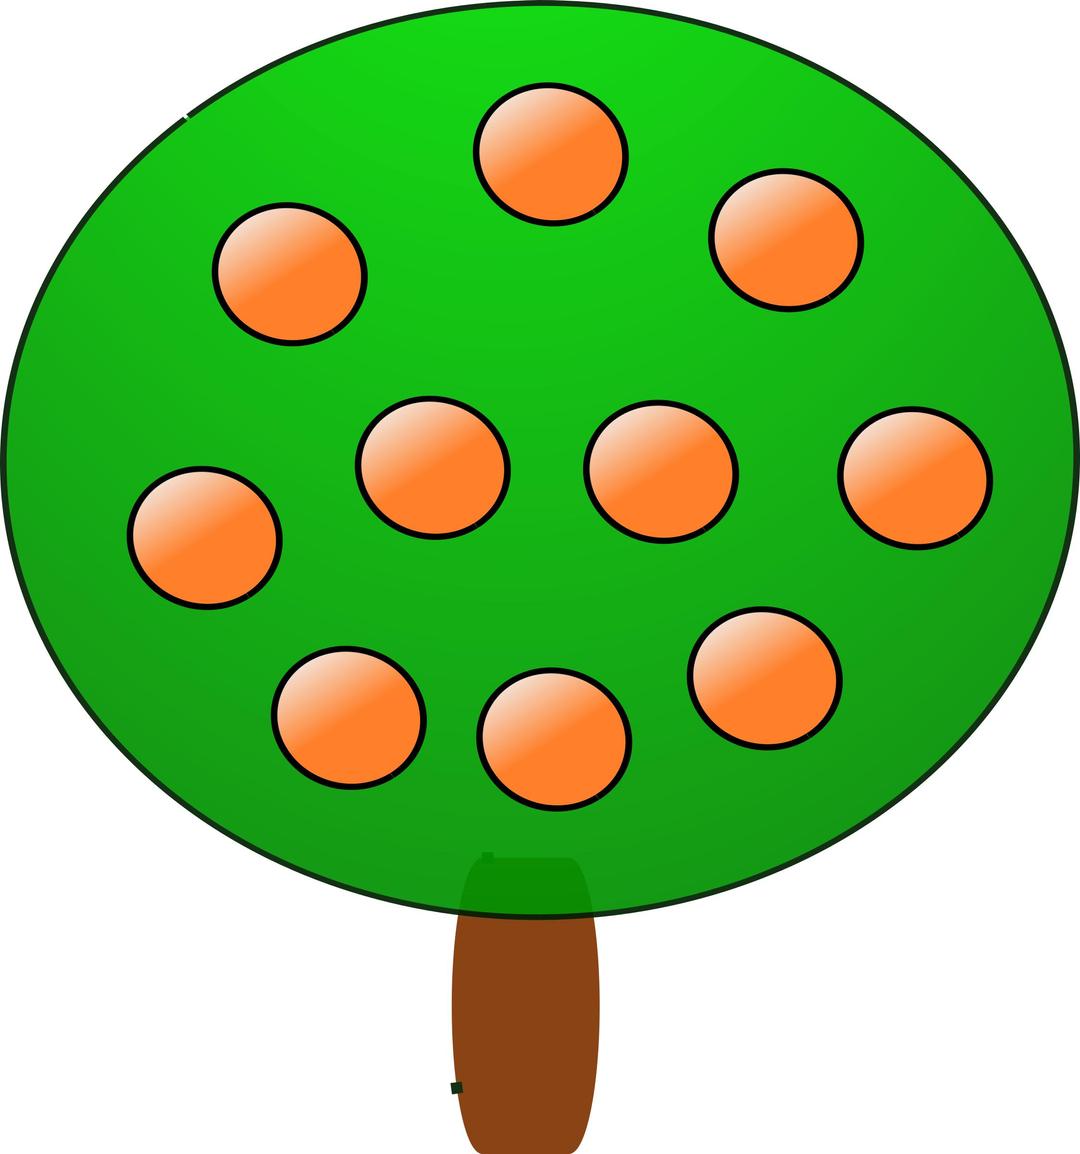 Fruit tree 3, orange png transparent